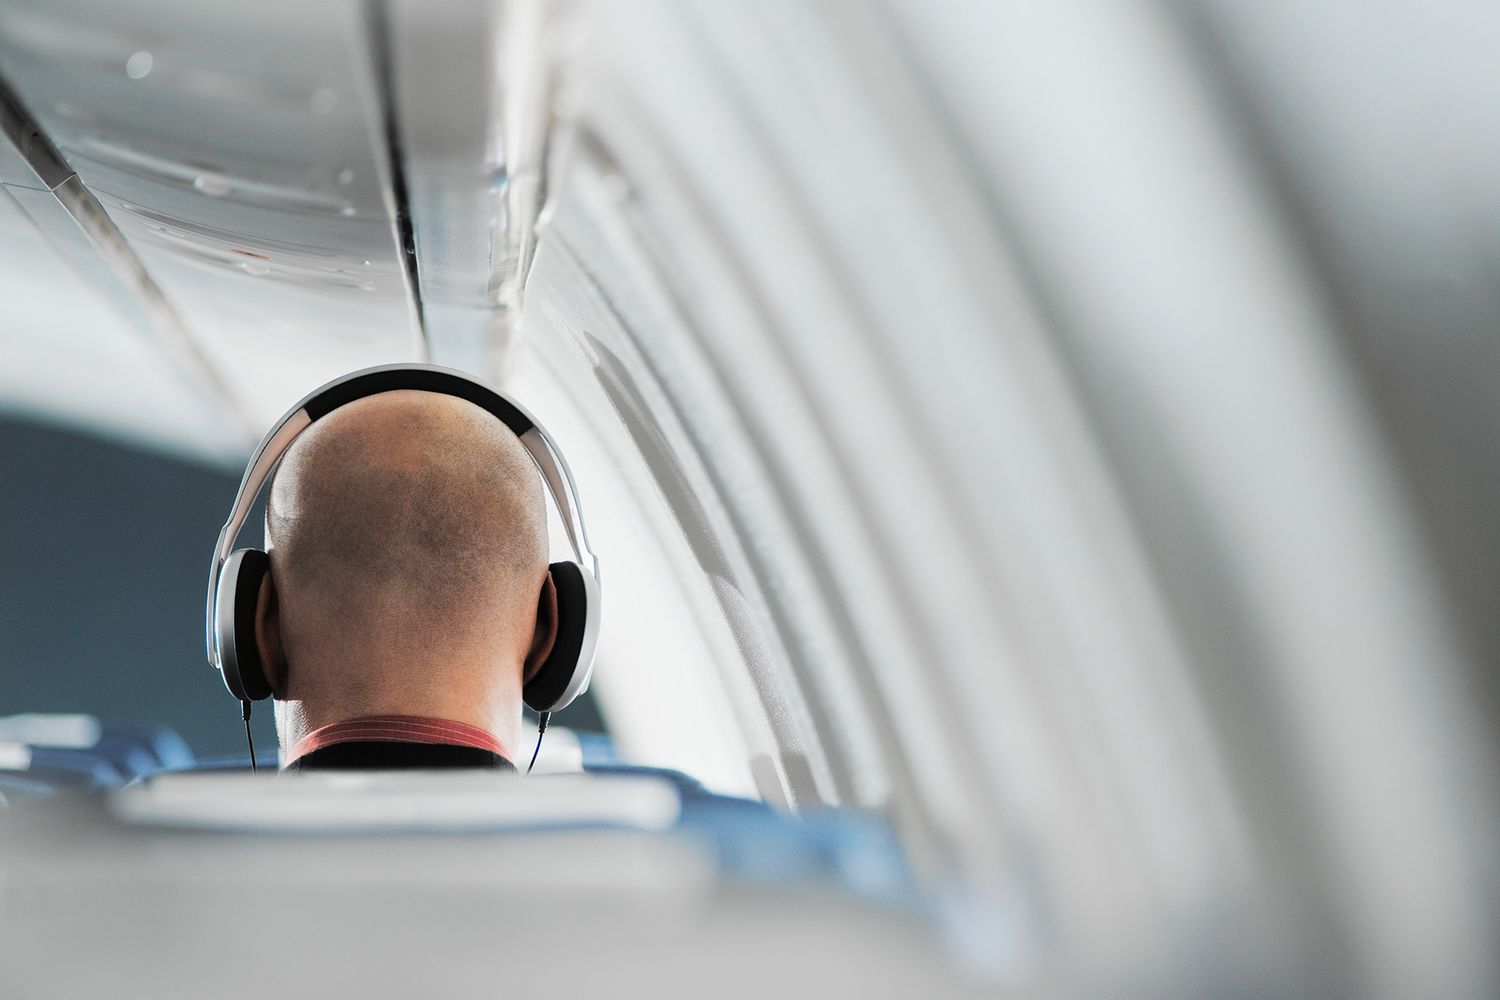 Businessman sitting on airplane seat, wearing headphones